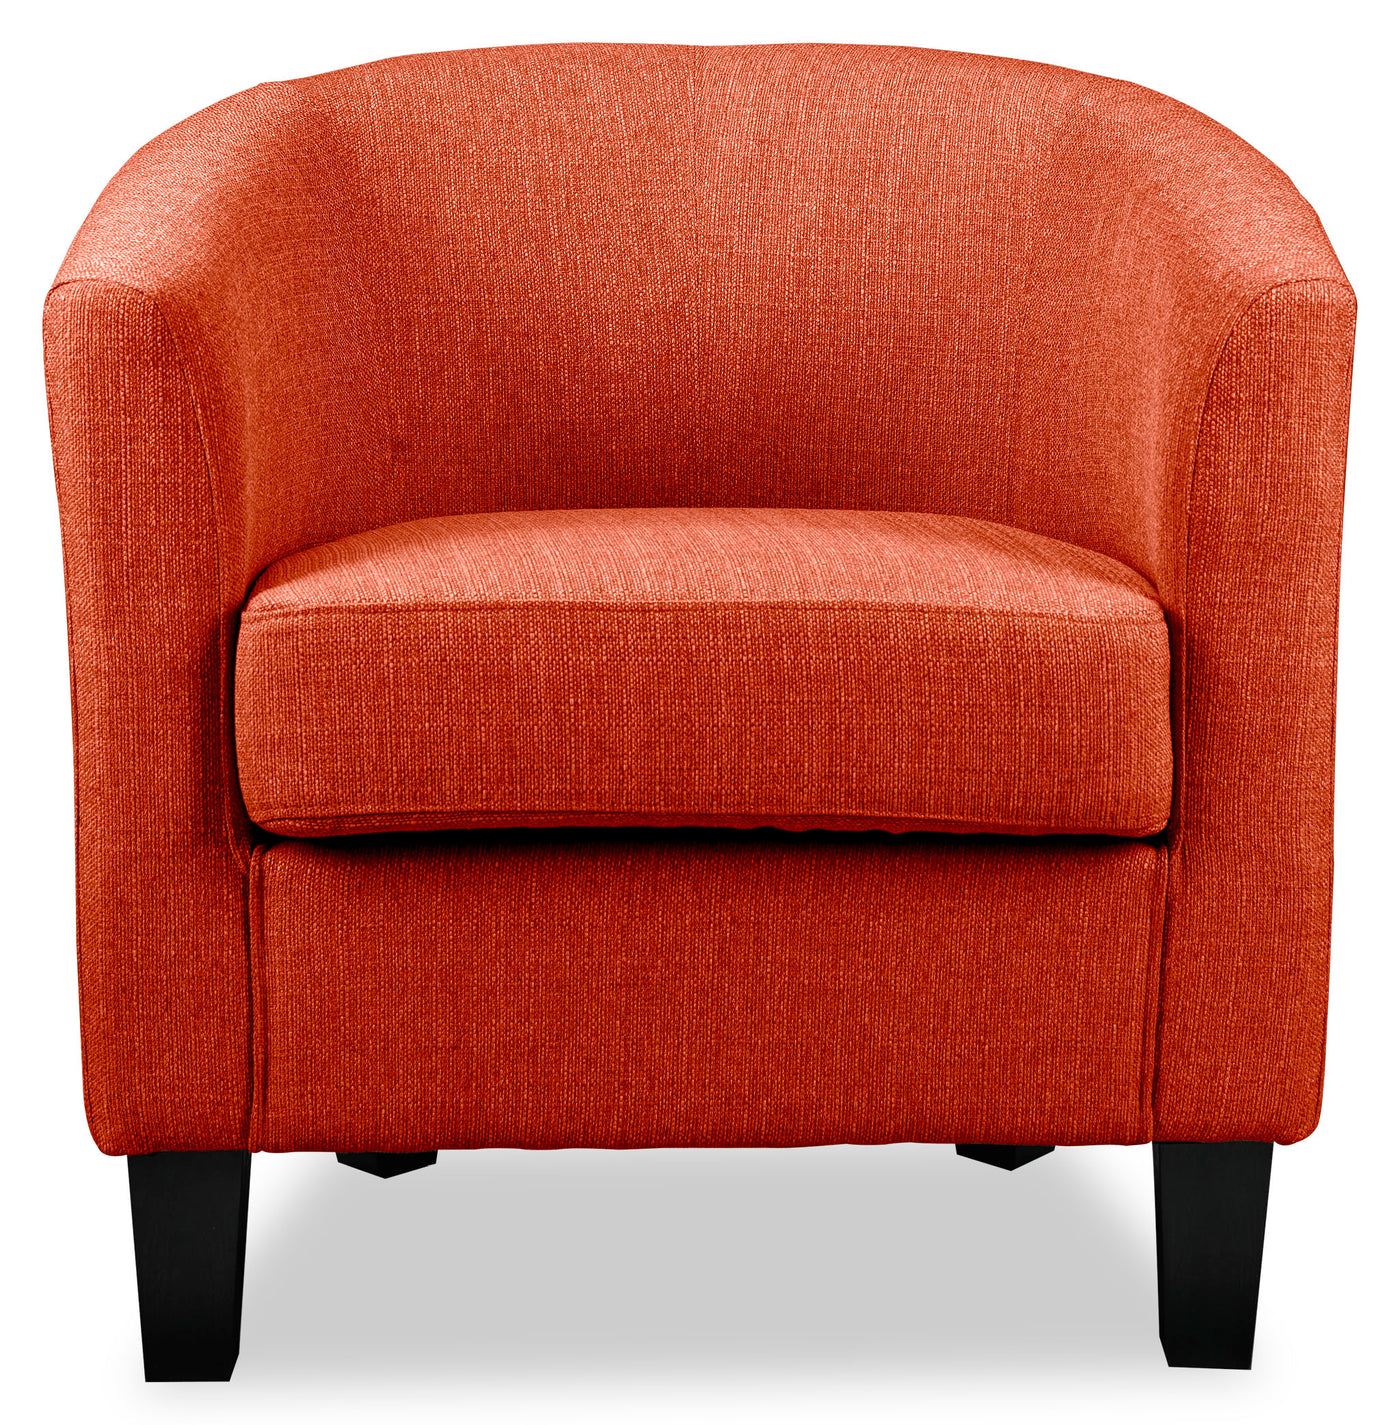 Enzo Accent Chair - Orange